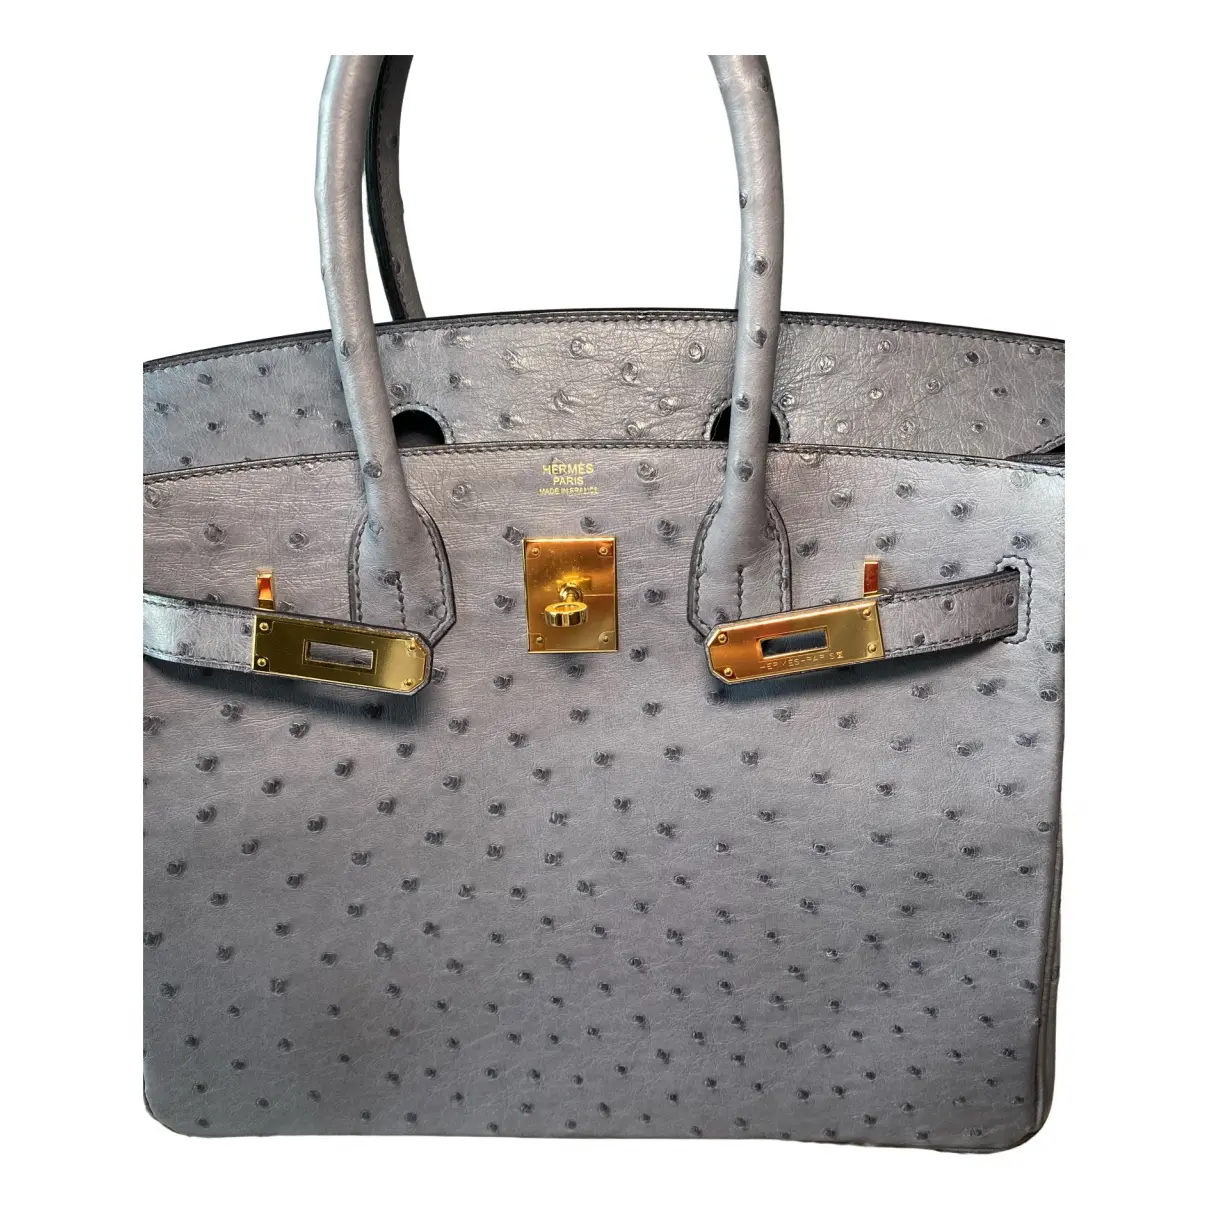 Buy Hermès Birkin 30 ostrich handbag online